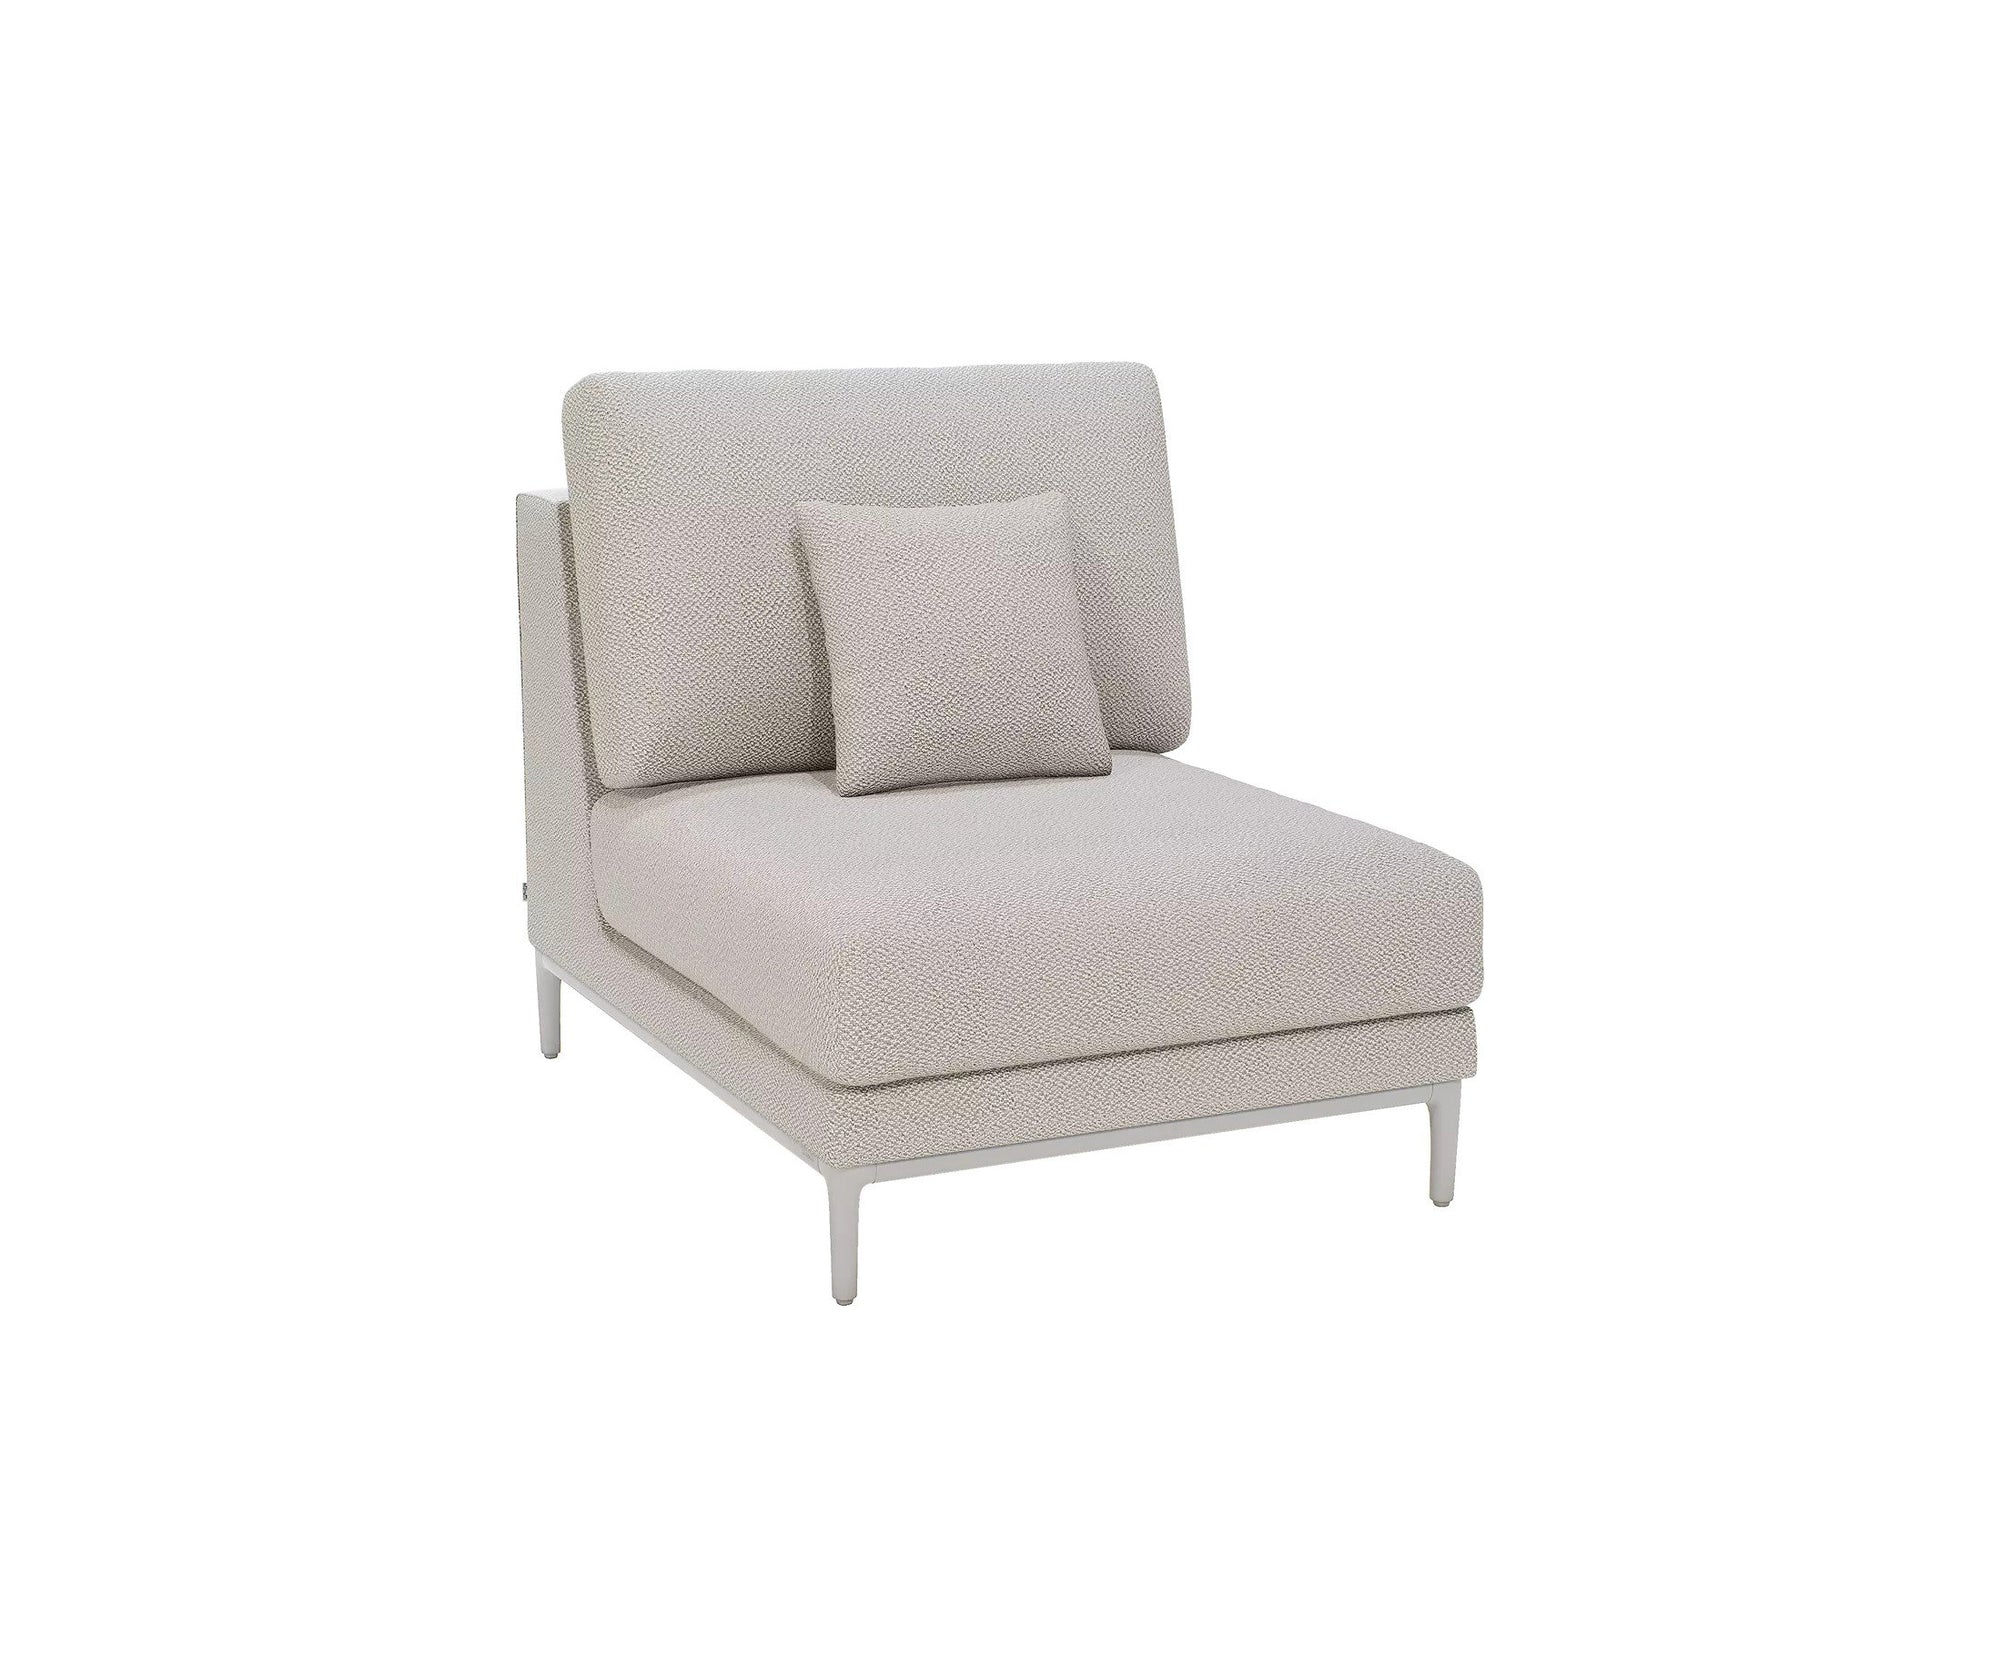 Zendo Sense Small Middle Seat Lounge Chair